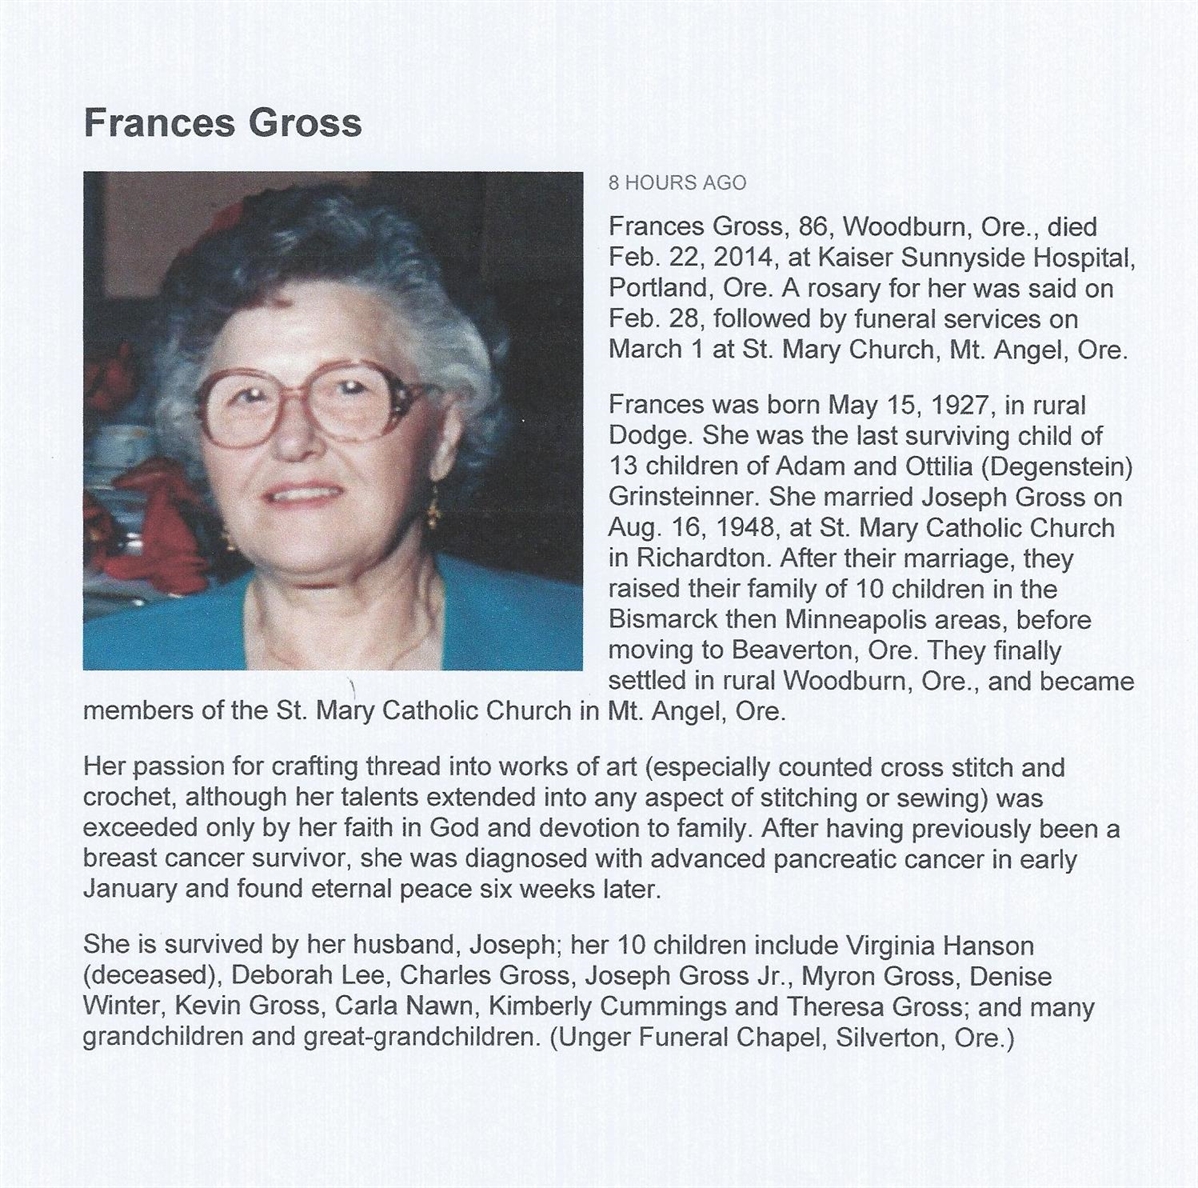 February 22, 2014 Frances obit card.